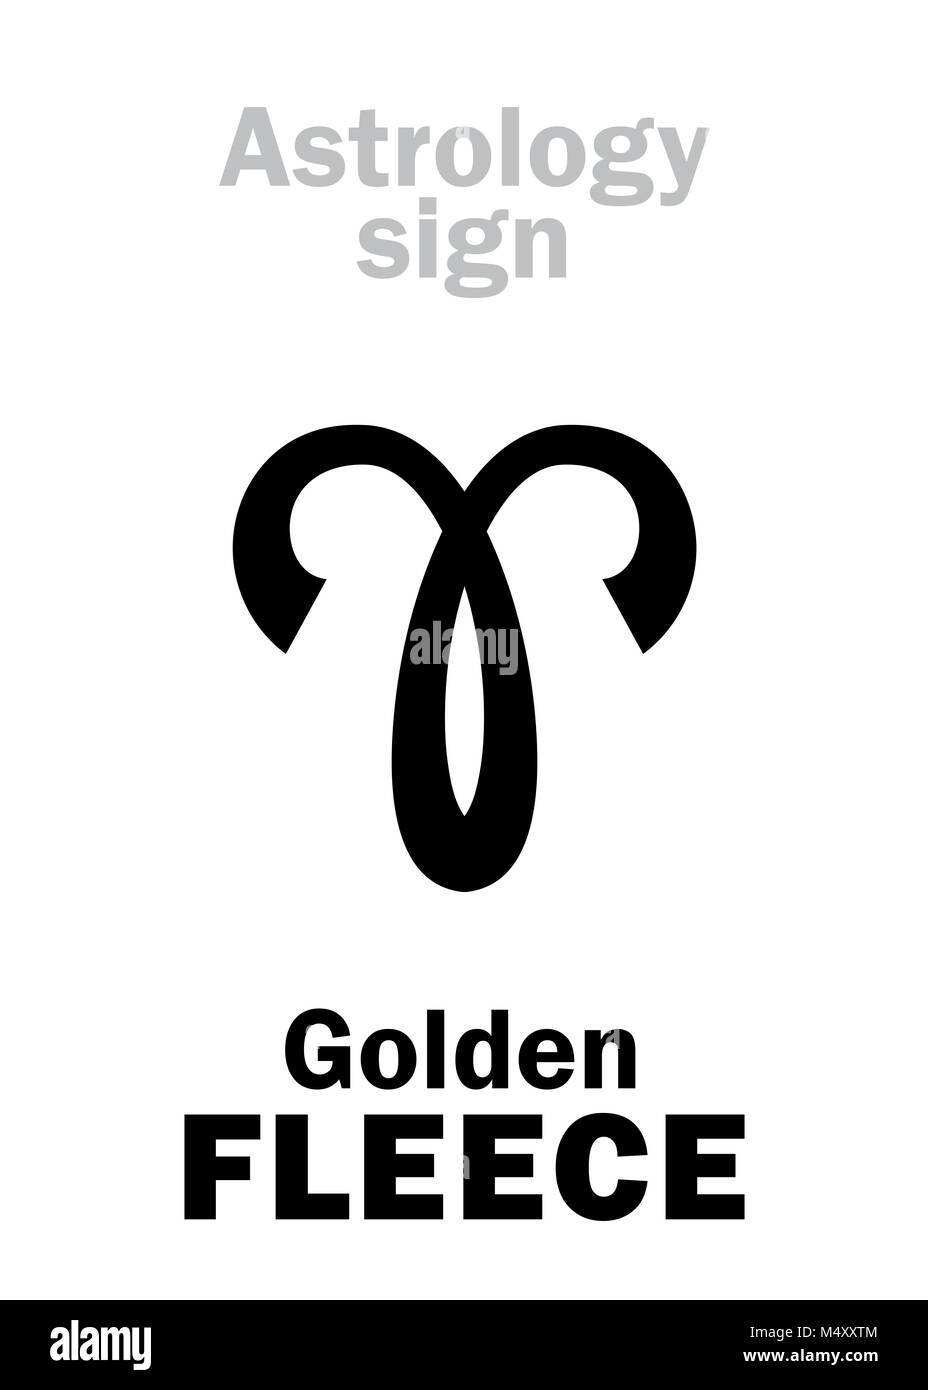 Astrology: Golden FLEECE Stock Photo